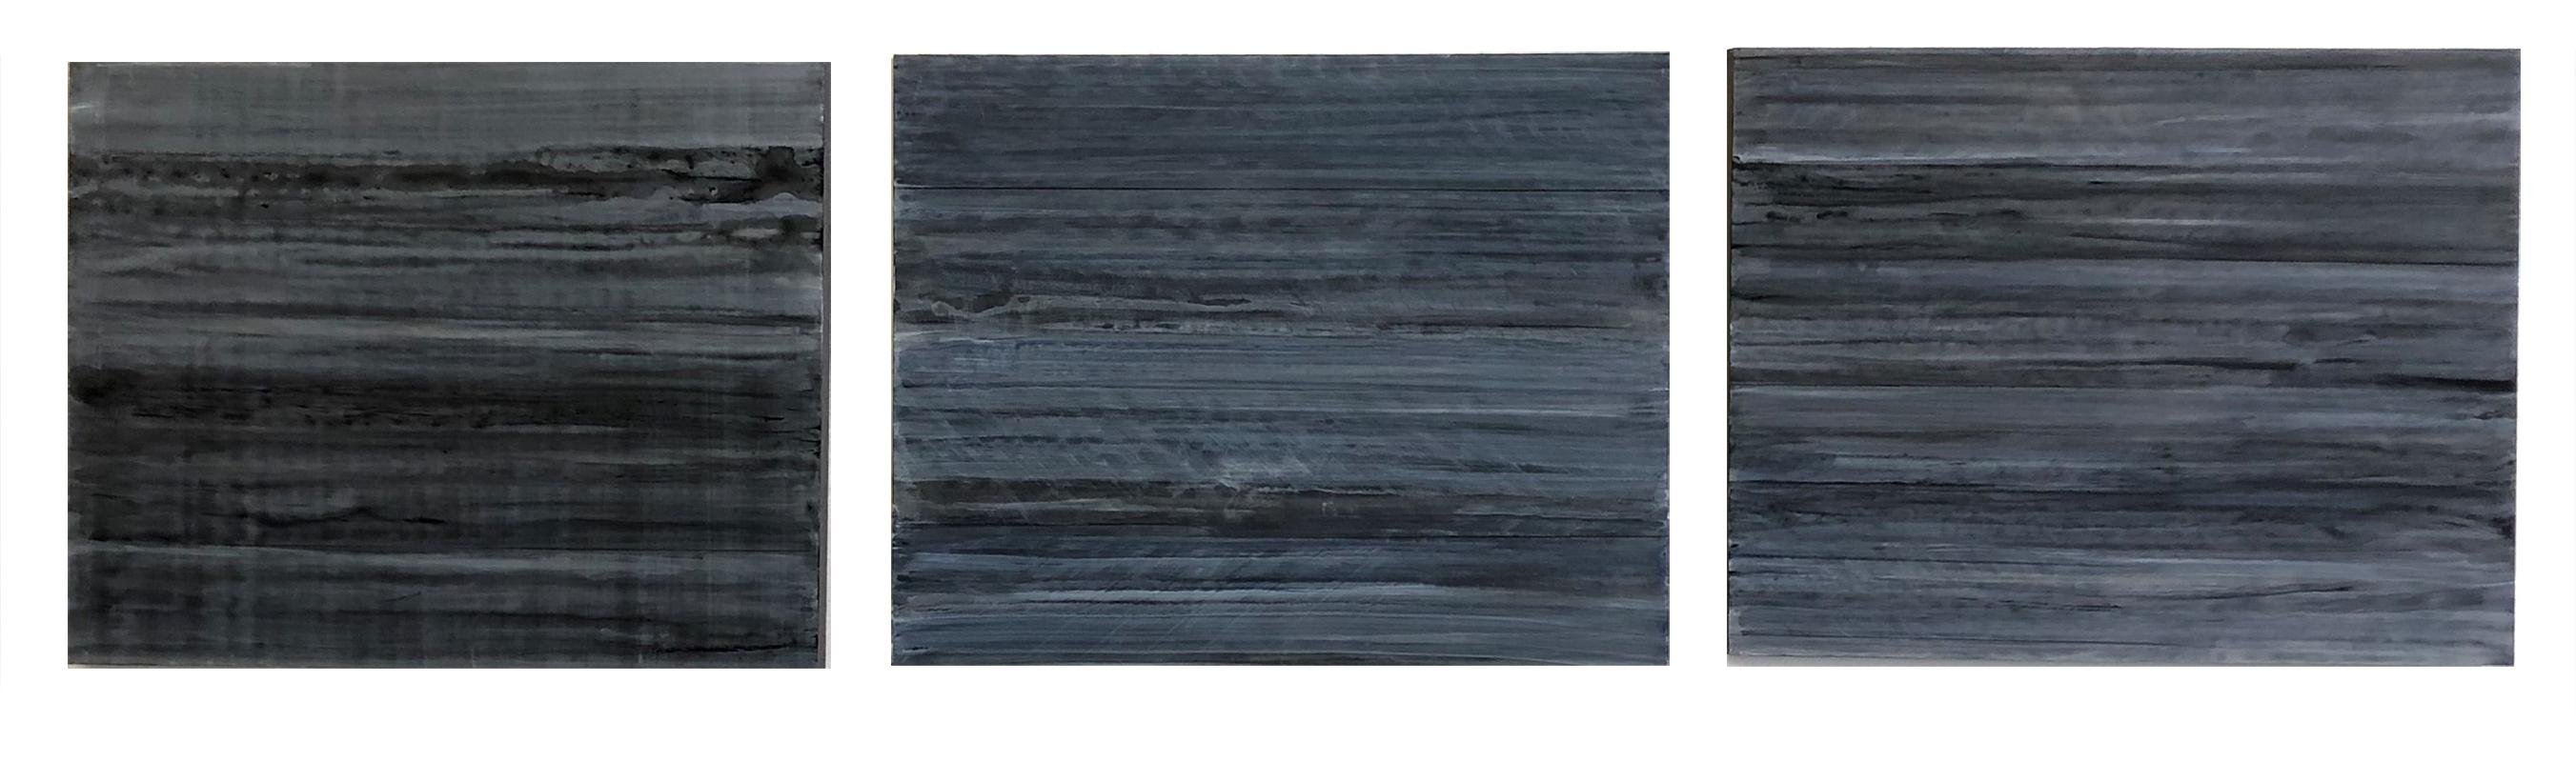 Ginny Fox Abstract Painting – C18-13 [A,B,C] (Abstract Rechteckiges Triptychon in schwarz und blau gestreiftem Muster)